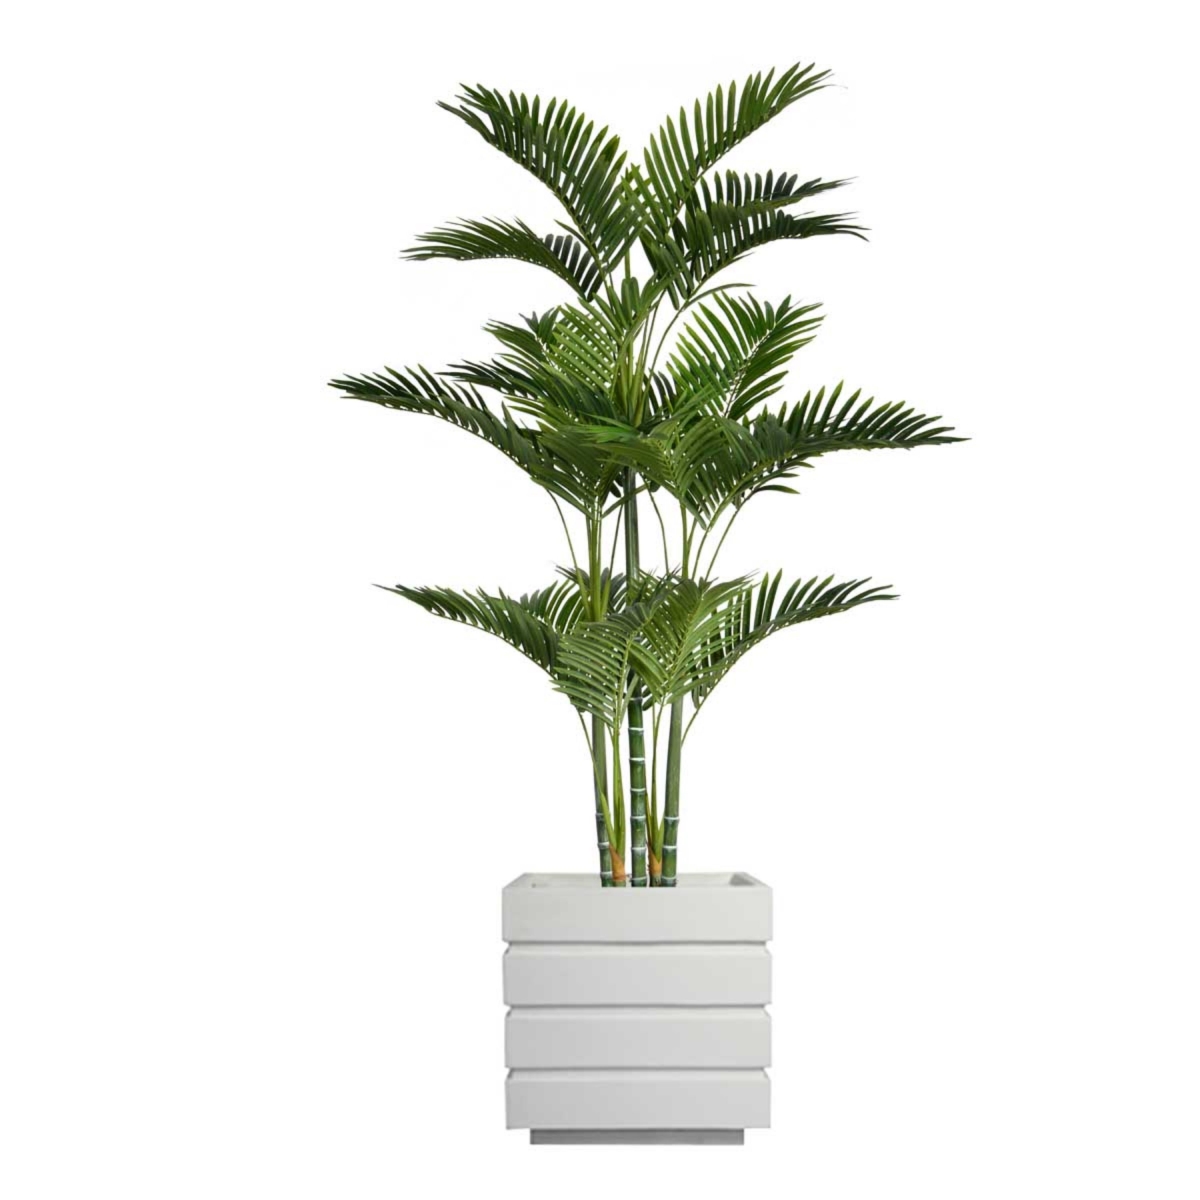 Vhx132211 66 In. Tall Palm Tree With Burlap Kit & Fiberstone Planter